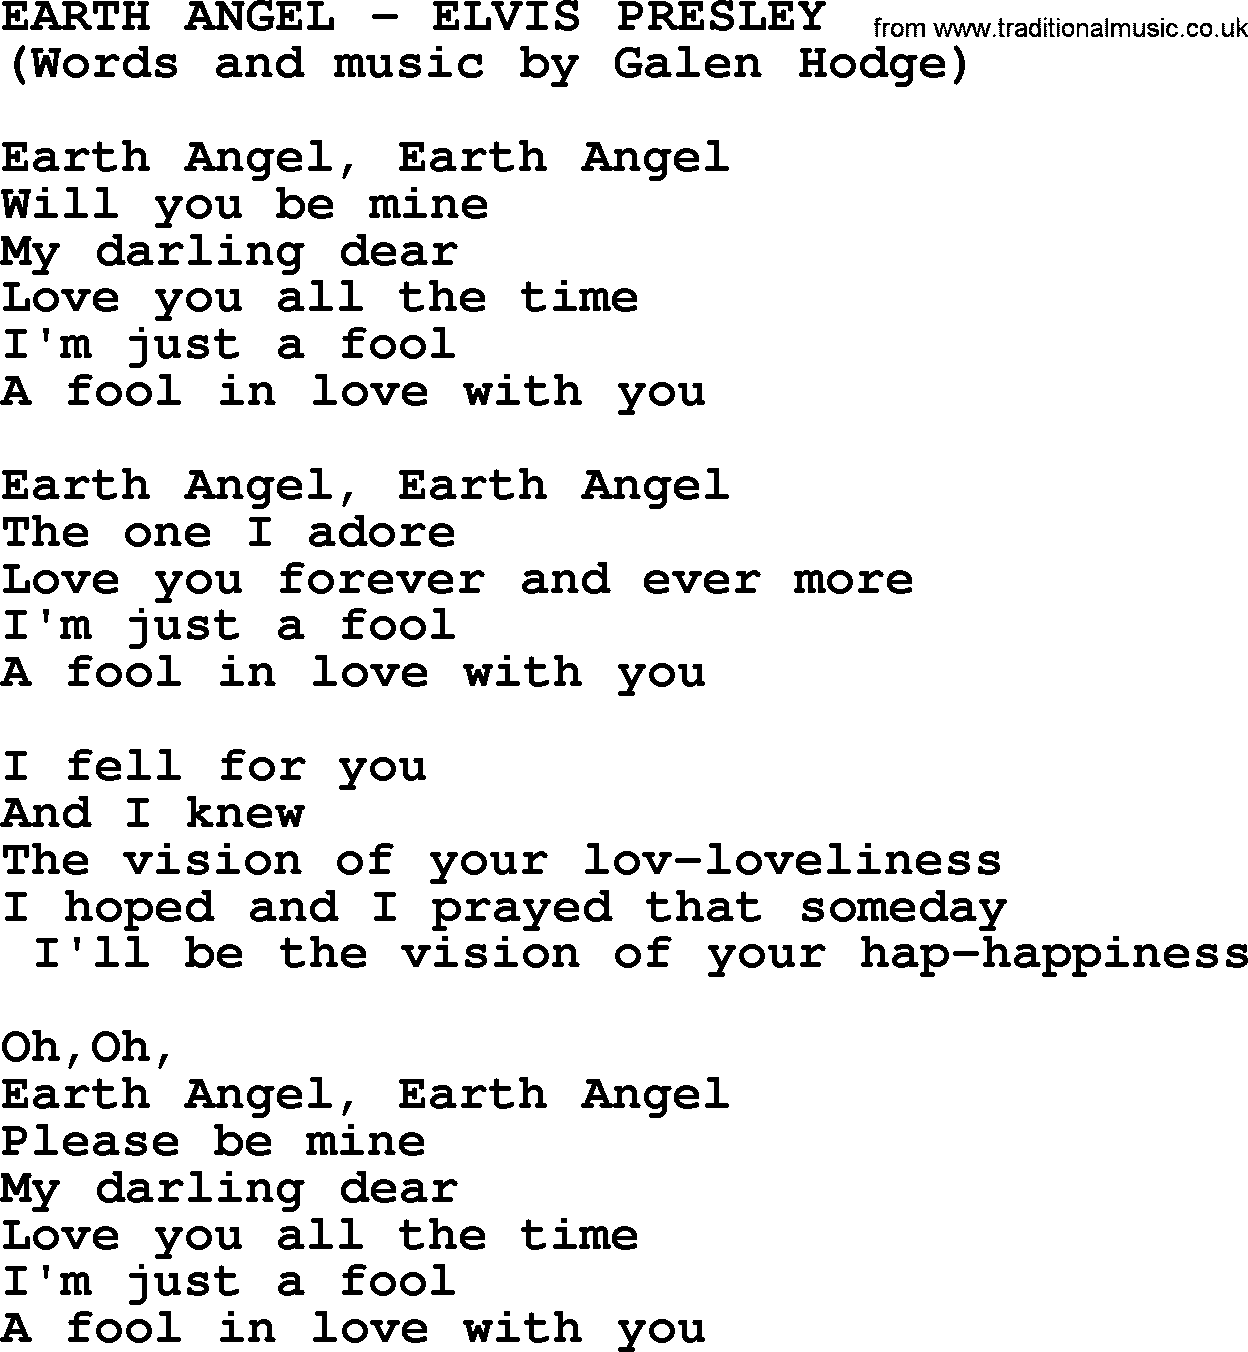 Elvis Presley song: Earth Angel lyrics